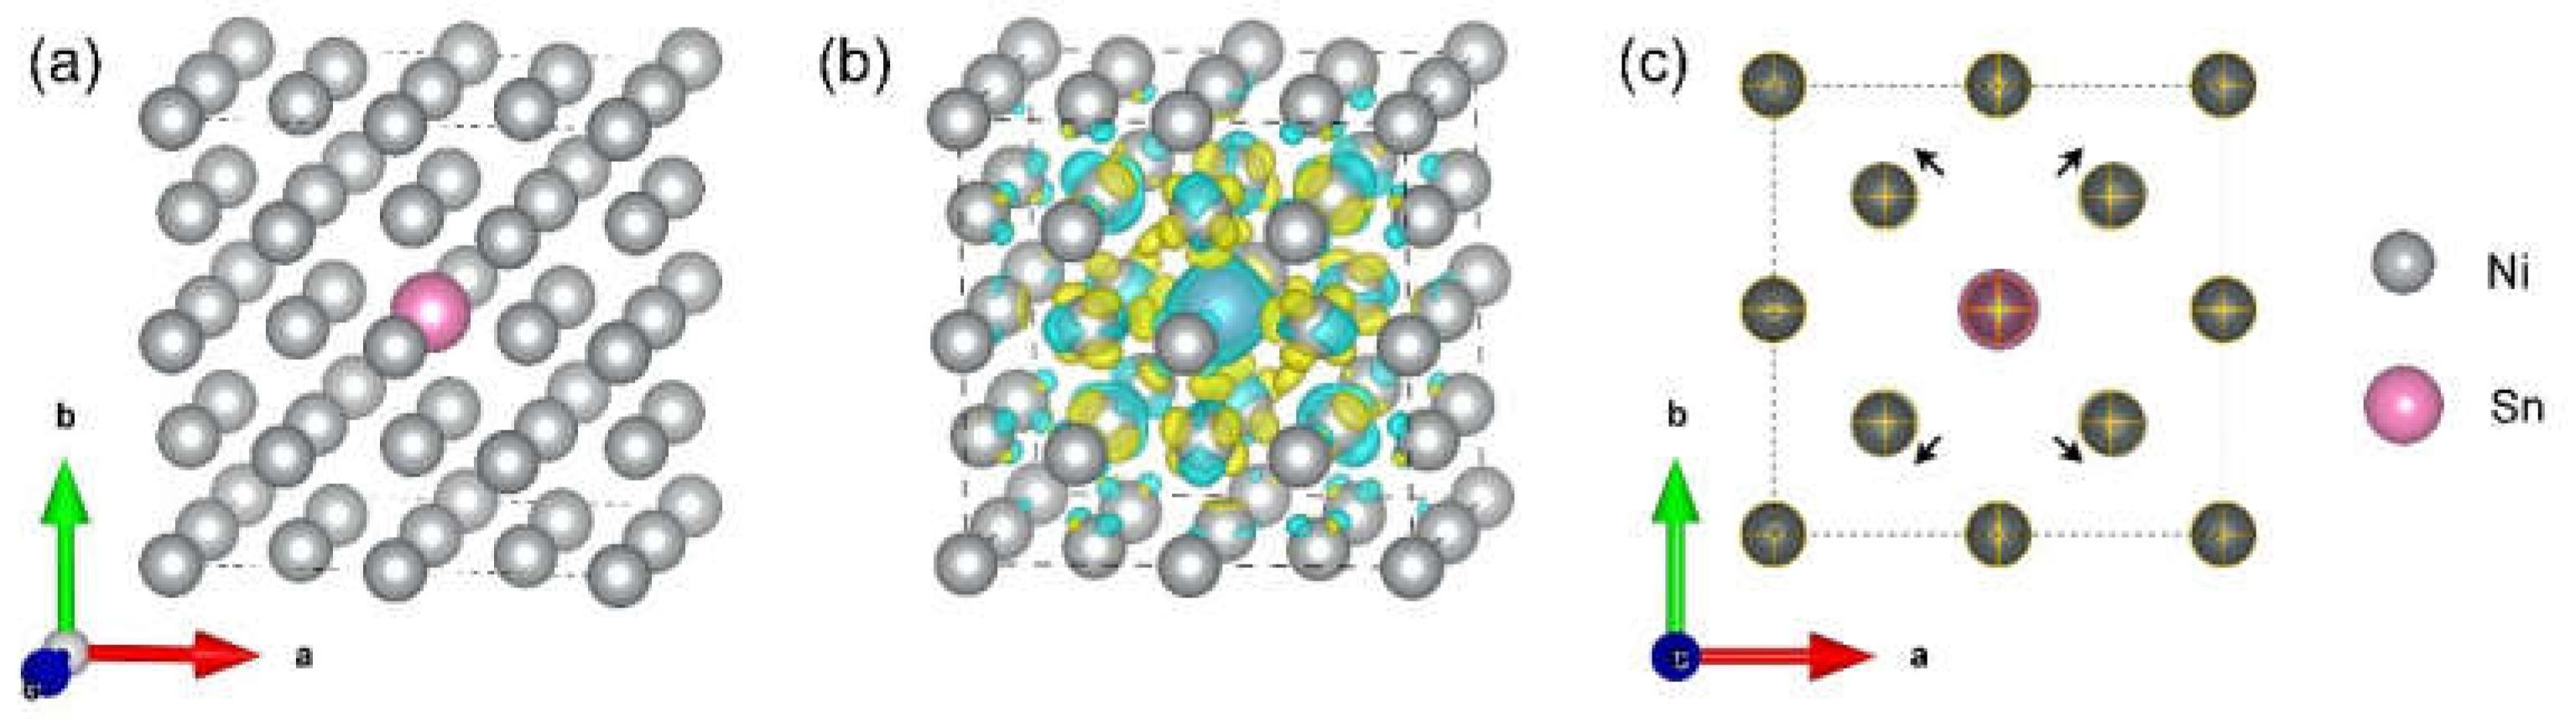 Nanomaterials | Free Full-Text | Strengthening Analysis of Ni-Sn Alloy ...